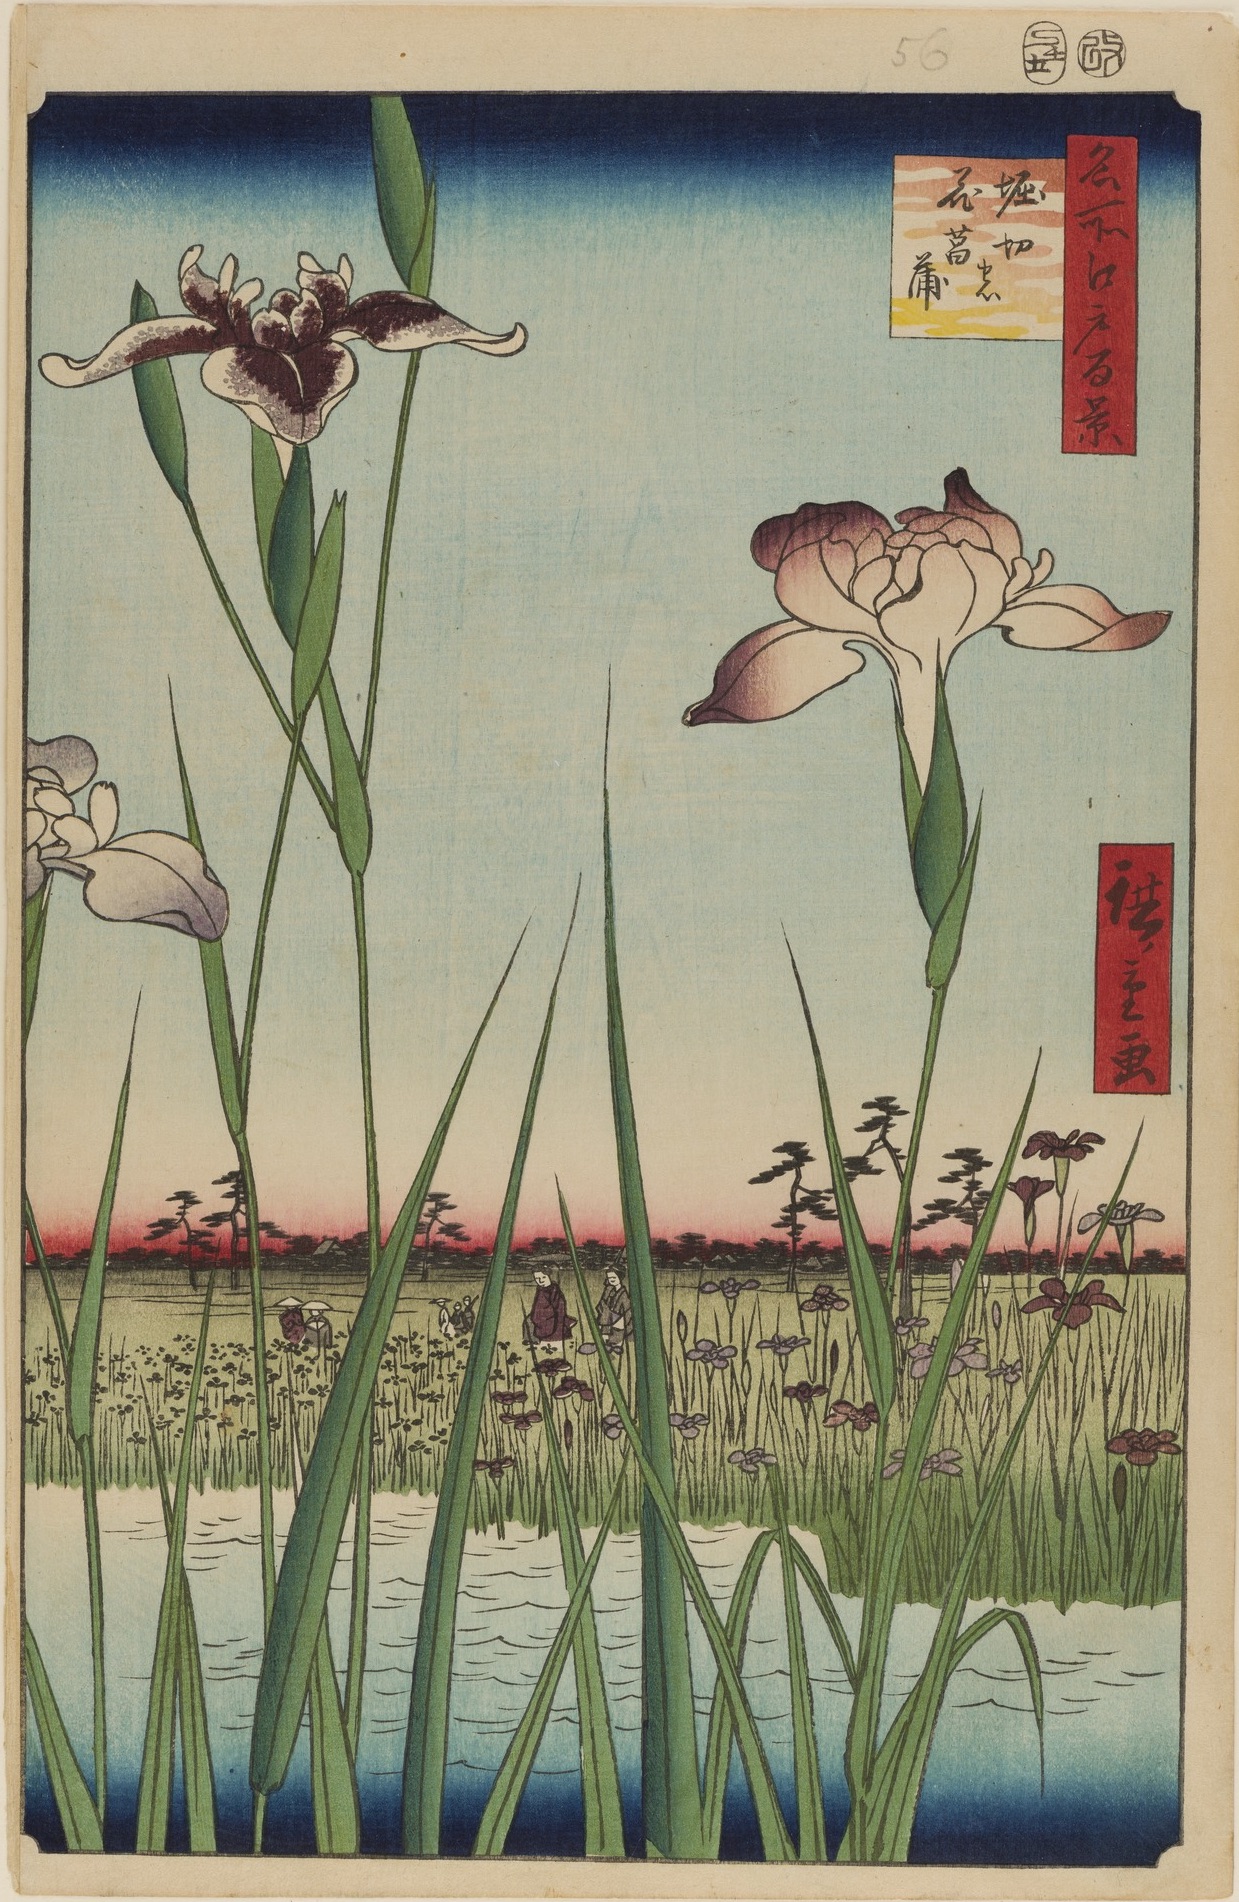 Horikiri íriszkertjei by  Hiroshige - 1856 - 34 x 22,9 cm 